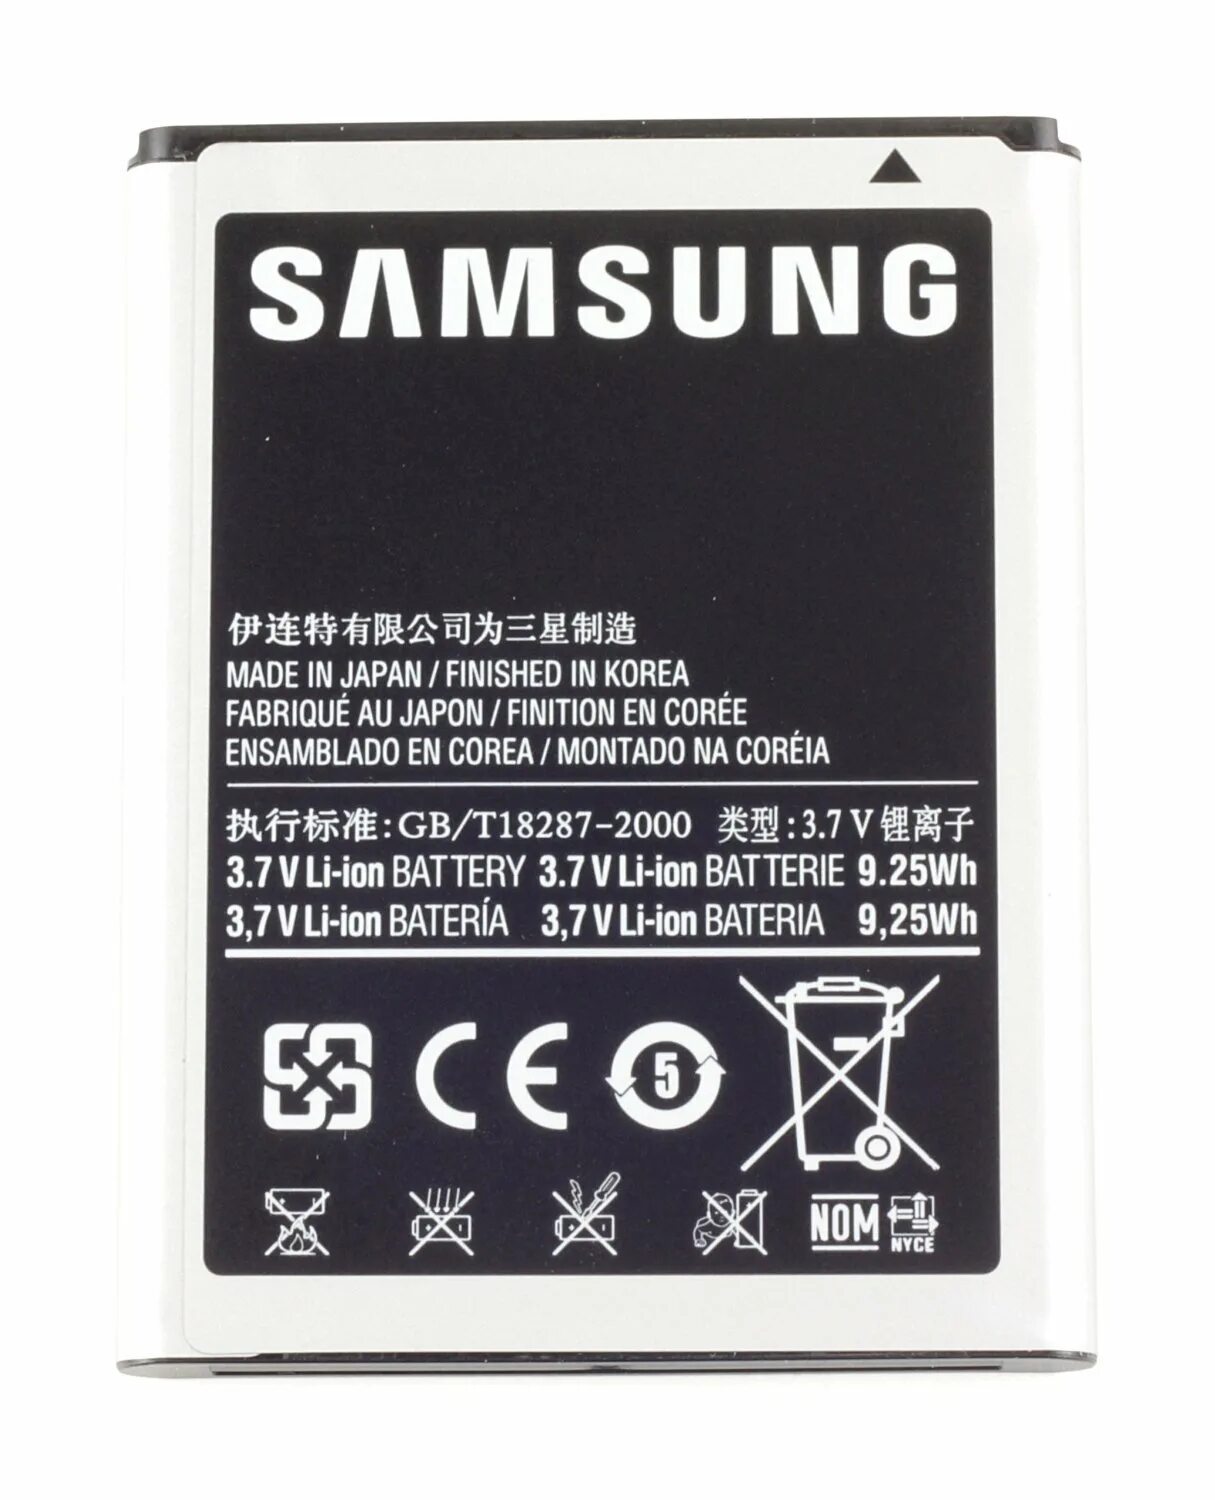 Galaxy note аккумулятор. Аккумулятор Samsung GB t18287 2000. Аккумулятор Samsung Note n7000. Аккумулятор Samsung eb615268vu. АКБ GB/t18287-2000 eb615268vu 3800 Mah.